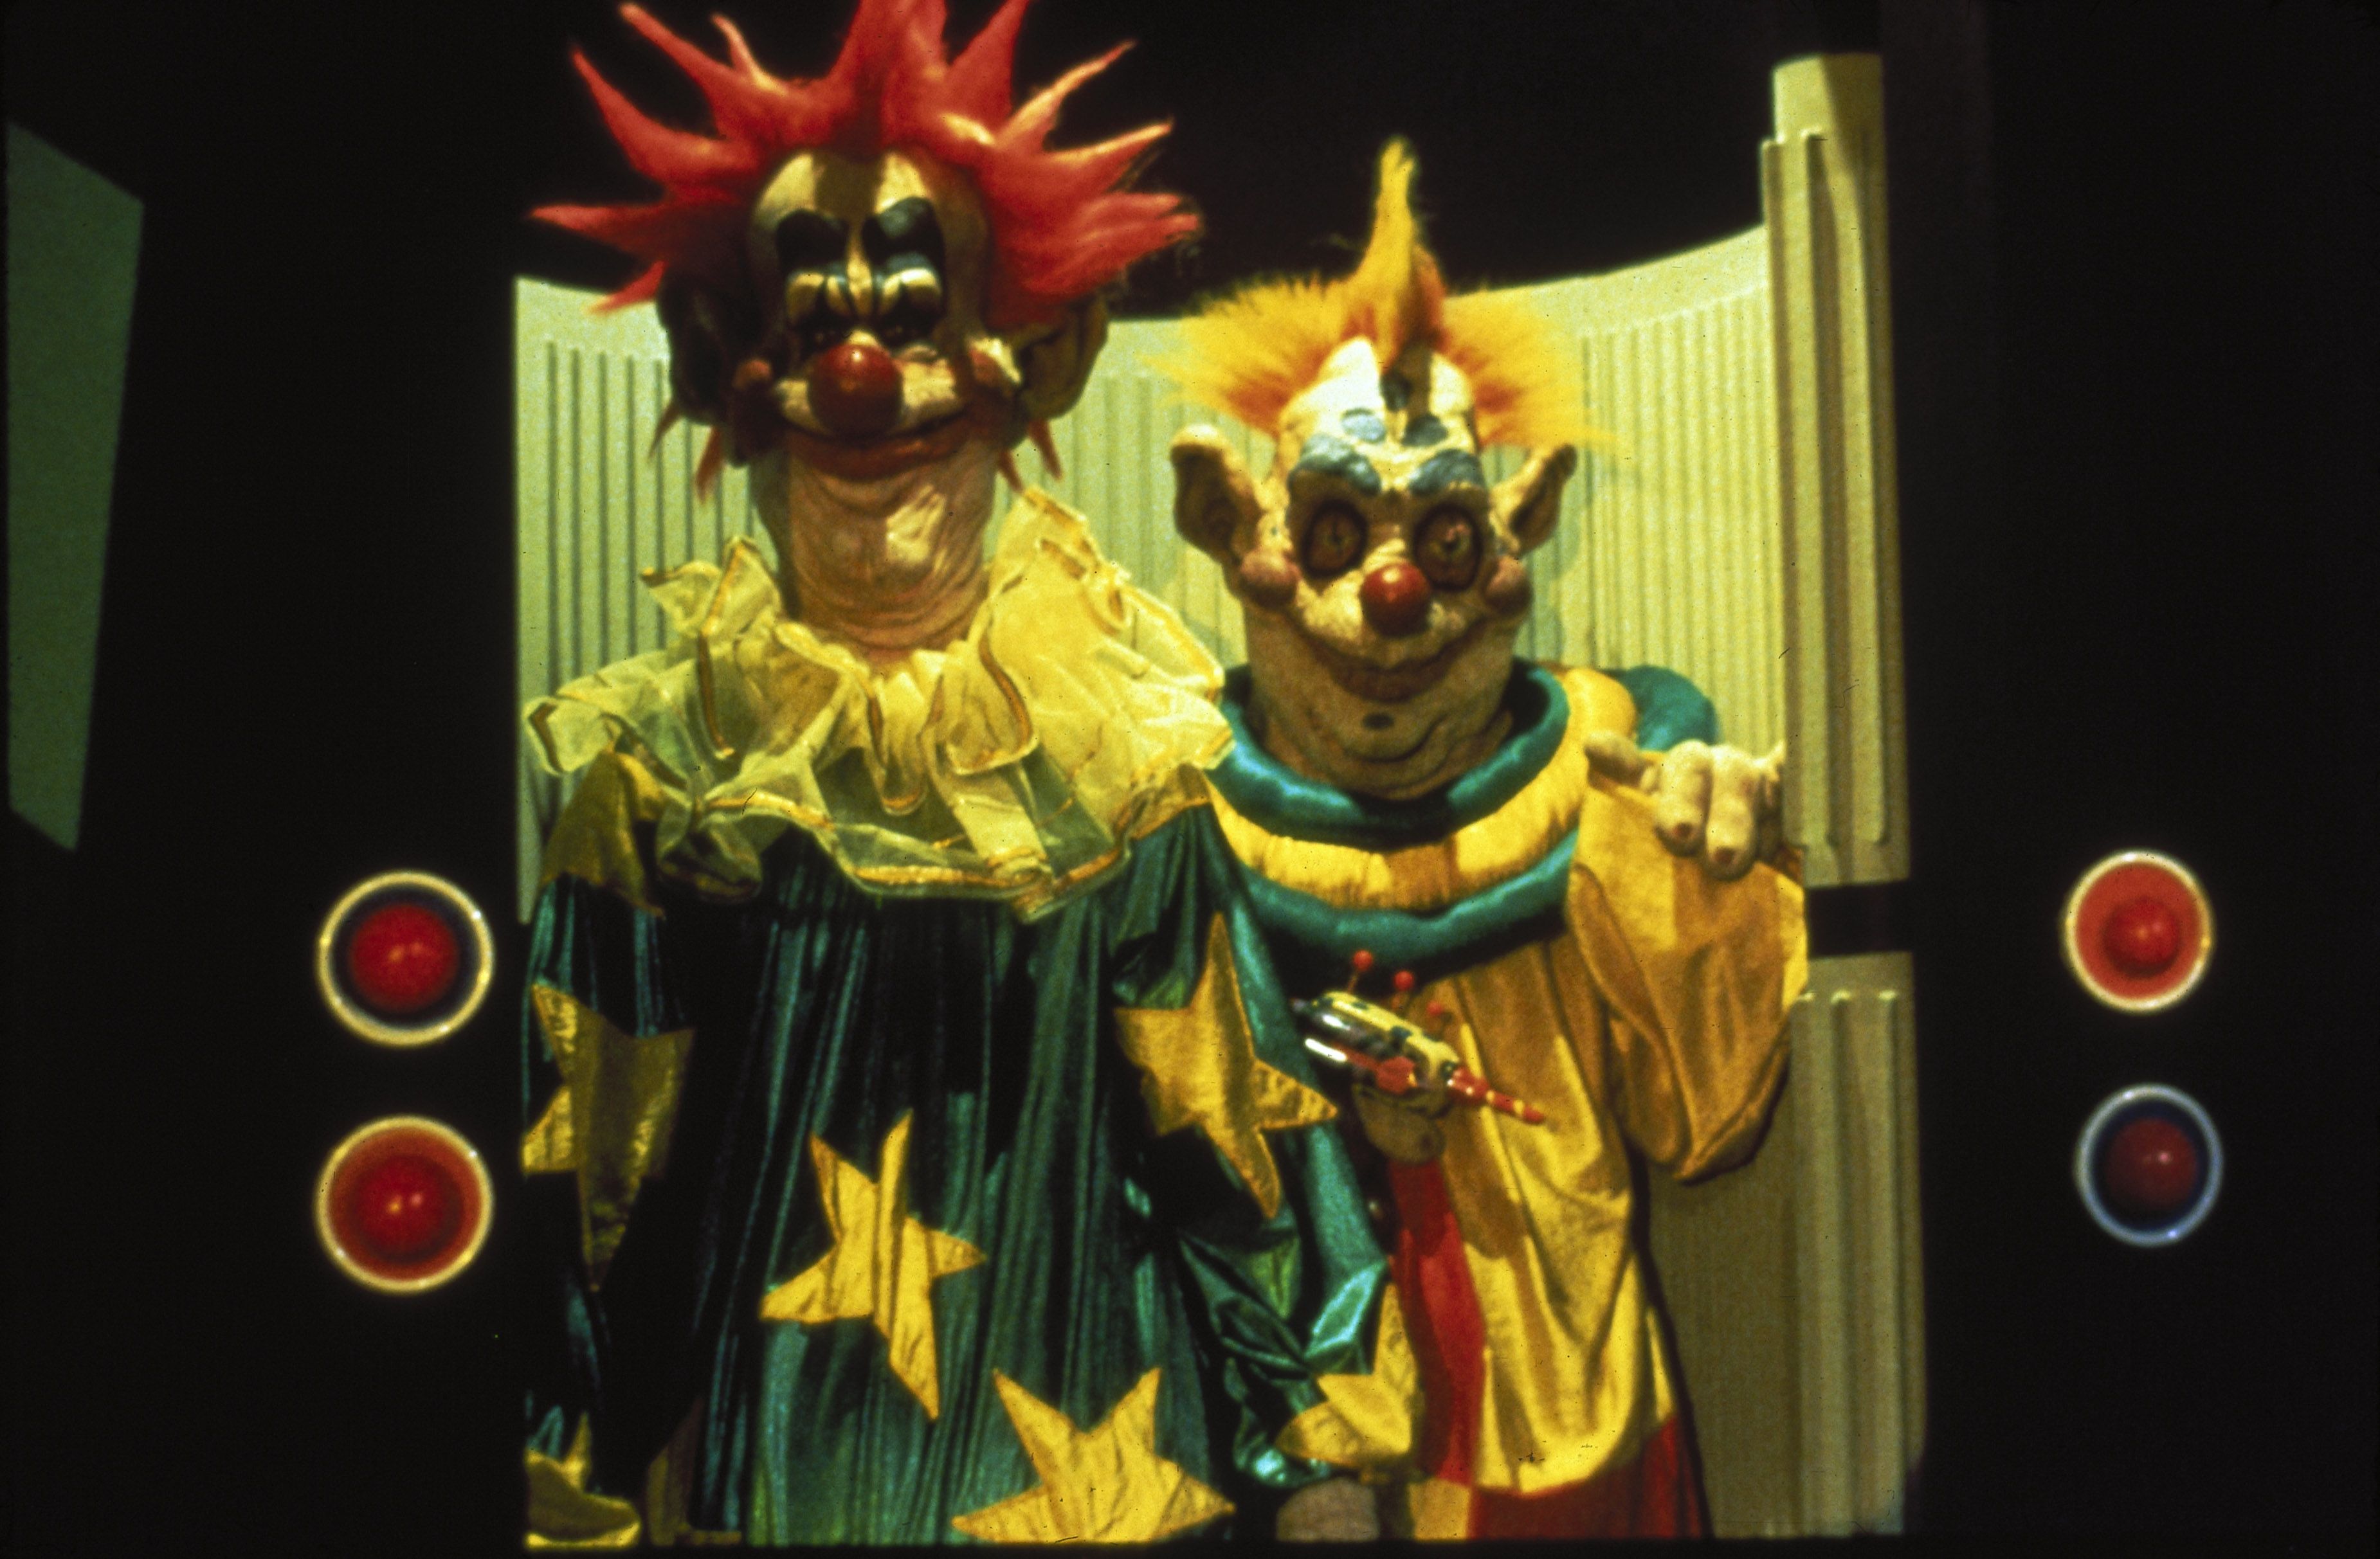 Universal Orlando Halloween Horror Nights Adds Chucky, Killer Klowns